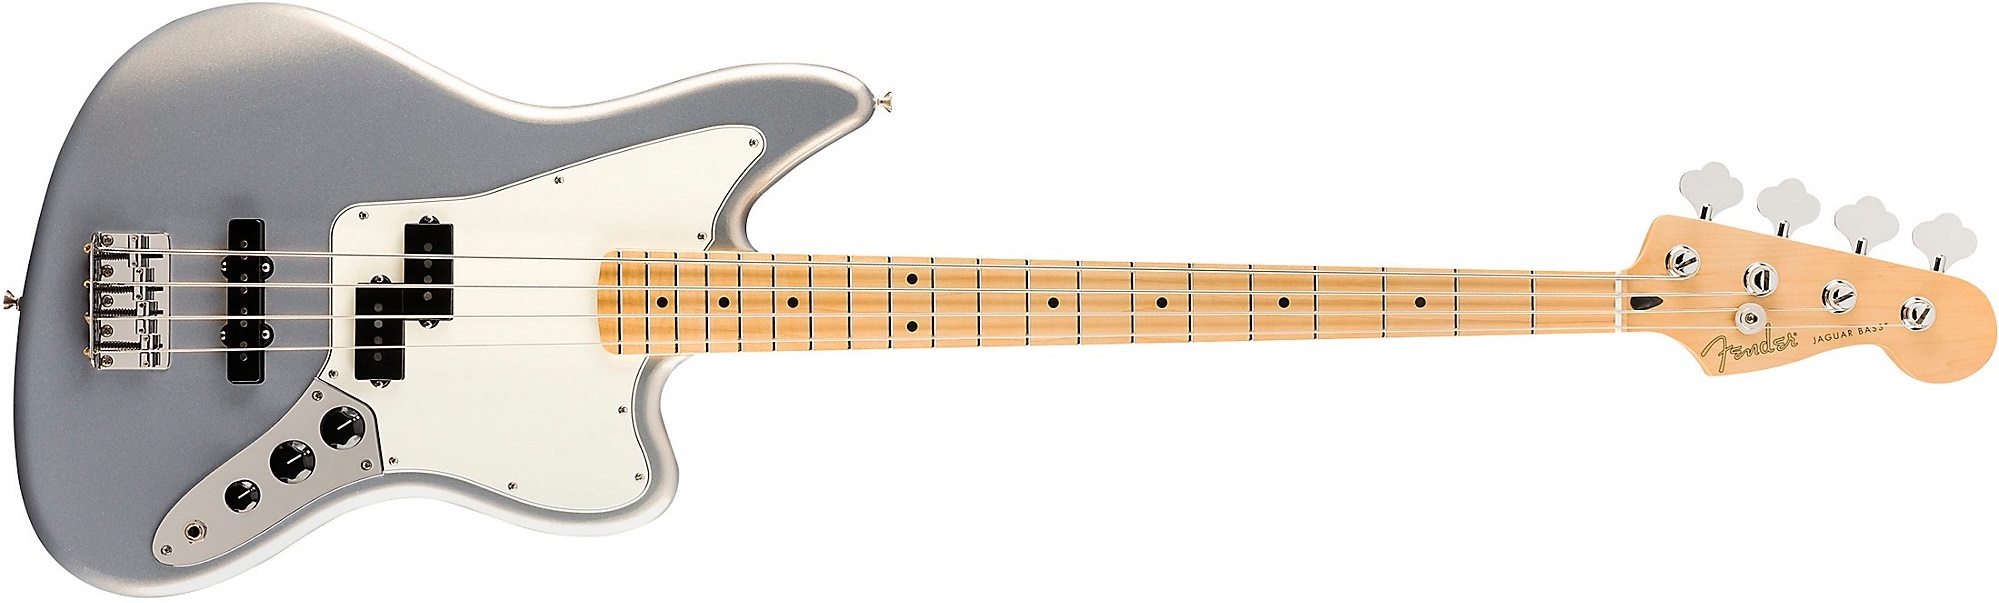 Fender Player Jaguar Electric Guitar on a white background